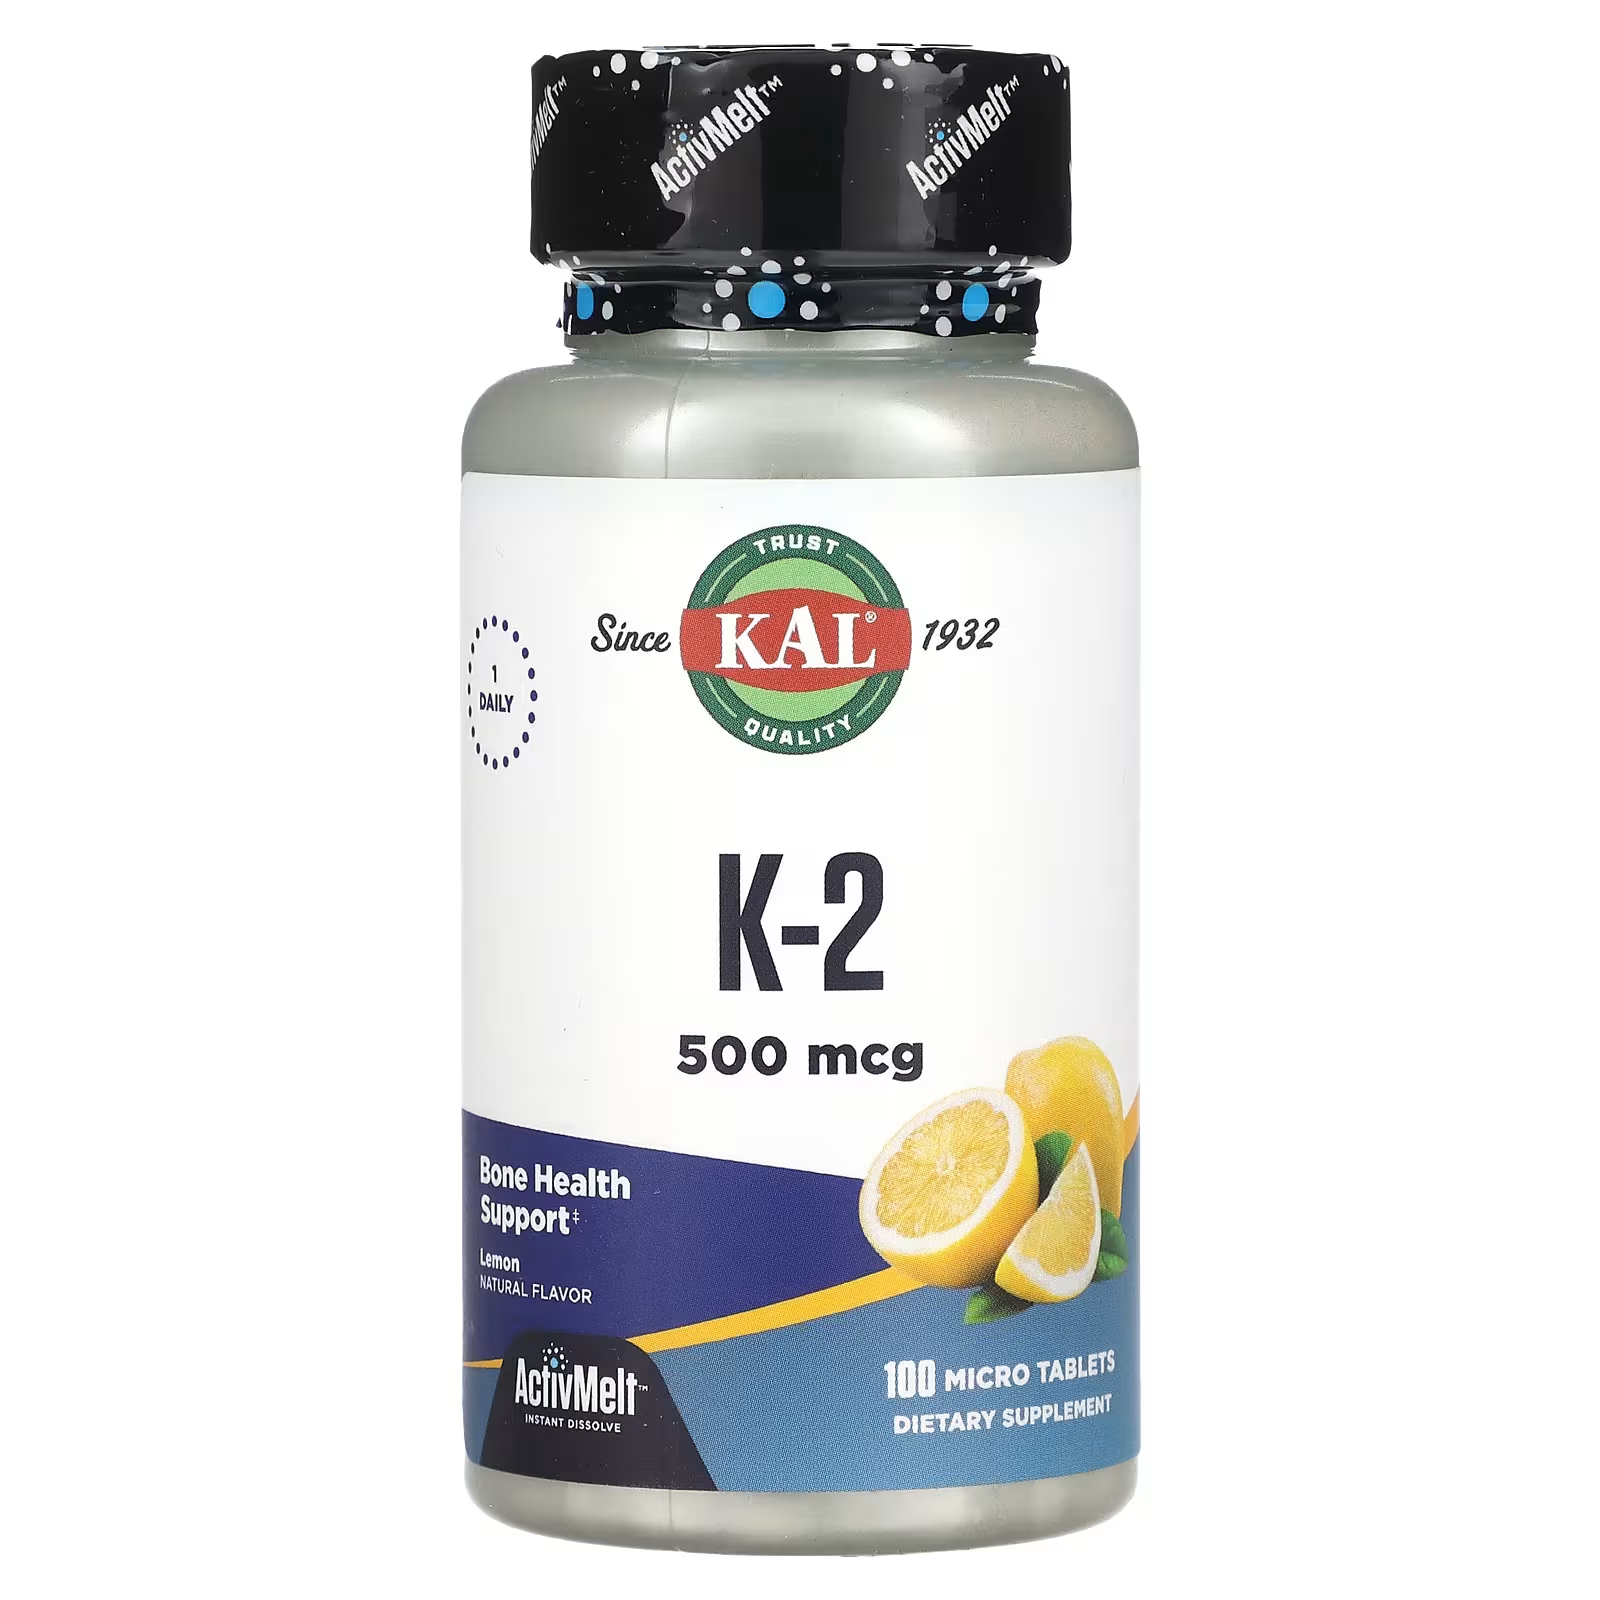 Пищевая добавка Kal K-2 лимон, 100 микротаблеток пищевая добавка kal d 3 k 2 малина 60 микротаблеток